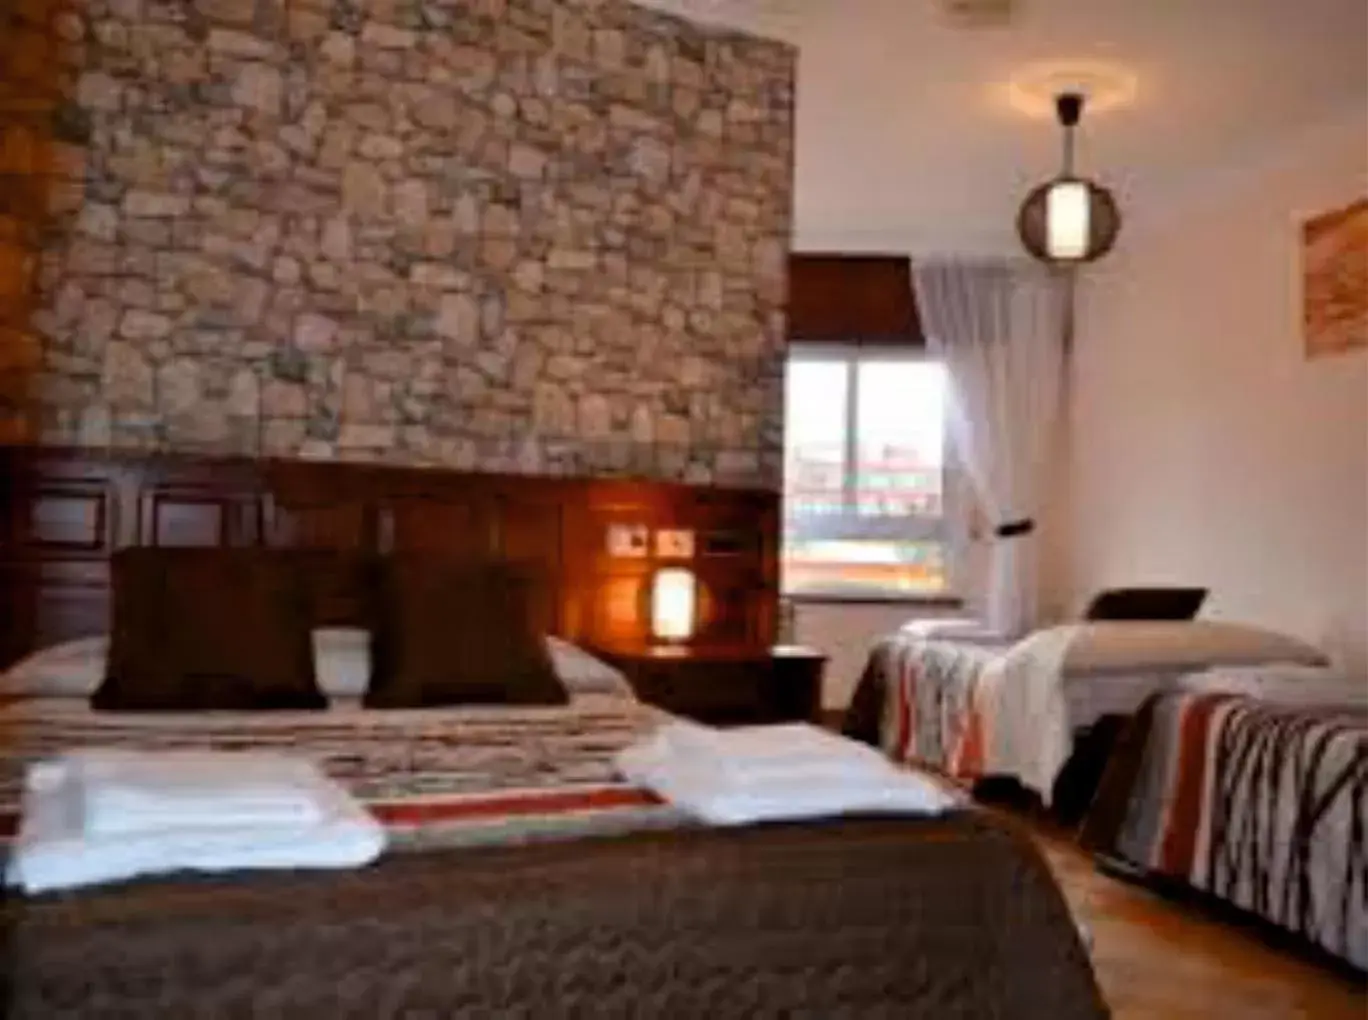 Decorative detail, Bed in Hotel Celta Galaico